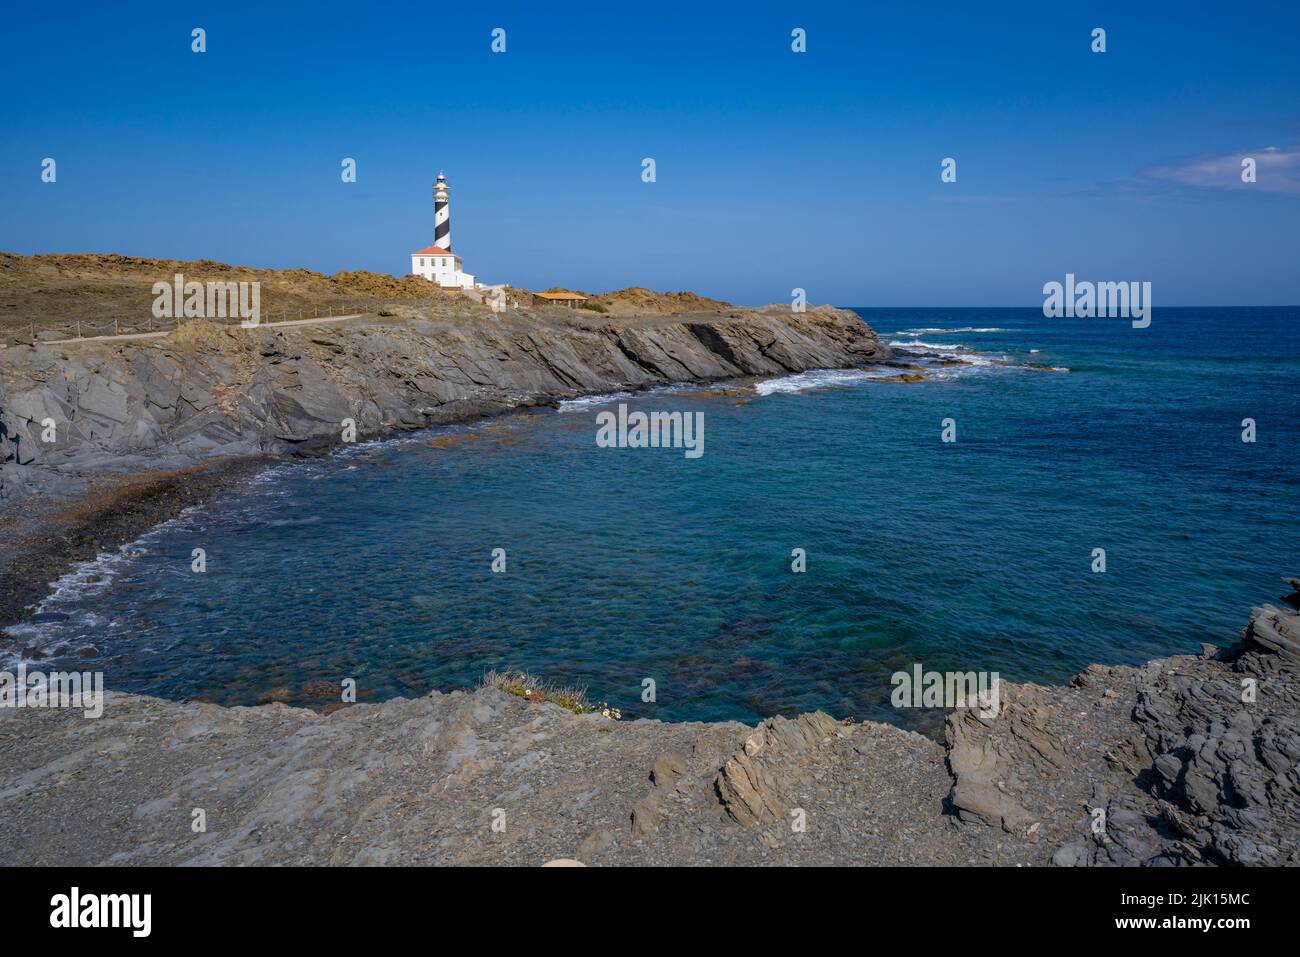 View of Far de Favaritx striped lighthouse on rocky headland, Carretera Favaritx, Menorca, Balearic Islands, Spain, Mediterranean, Europe Stock Photo